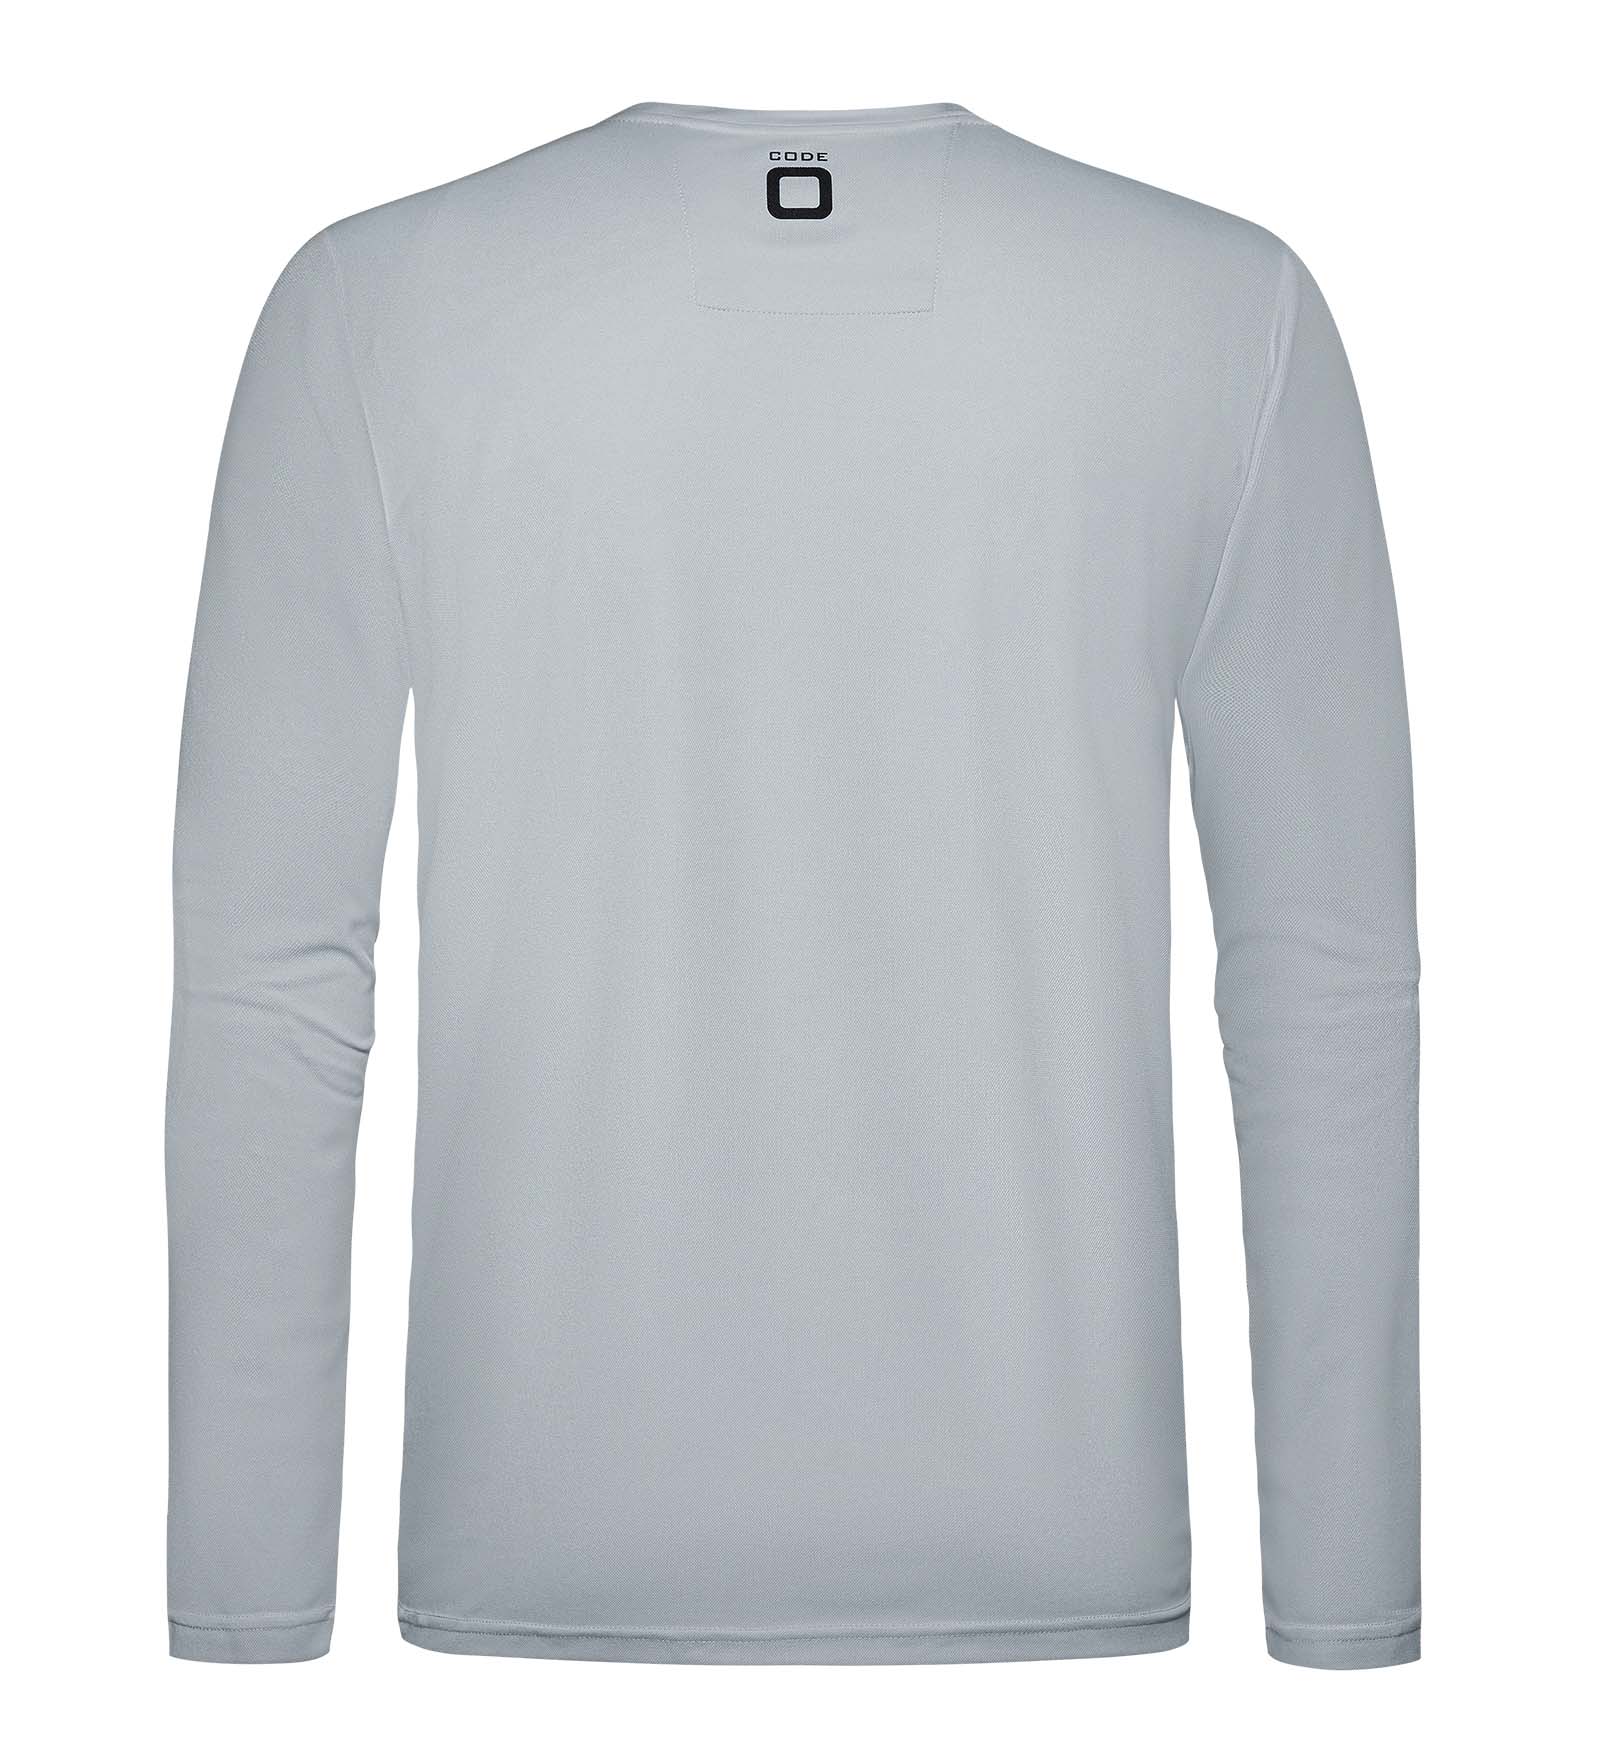 Long-Sleeve T-Shirt Grey for Men and Women 